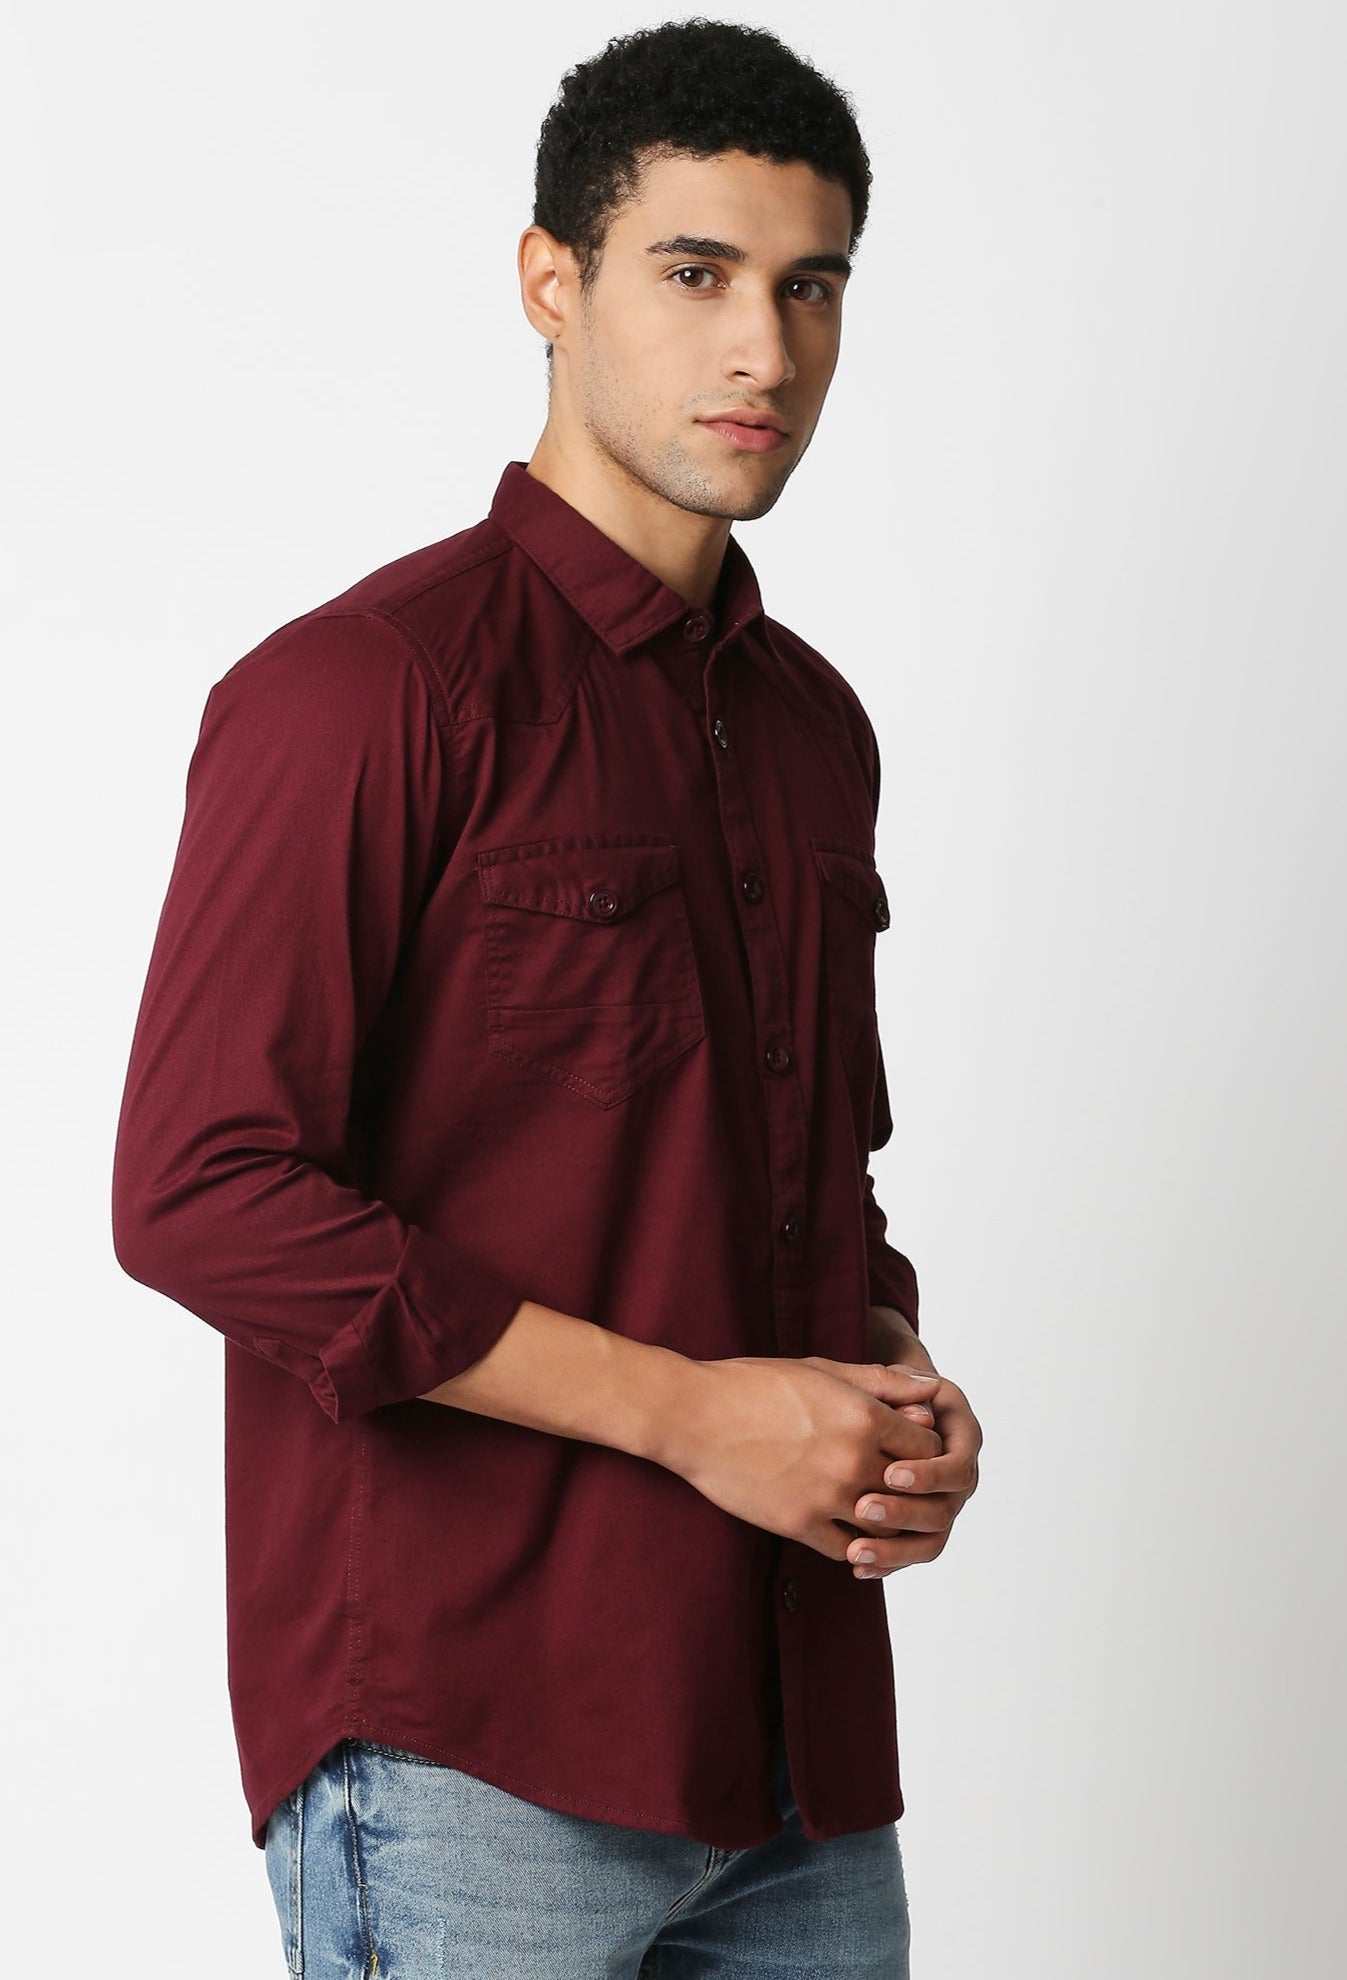 Fostino Maroon Double Pocket Full Sleeves Casual Shirt - Fostino Shirts & Tops